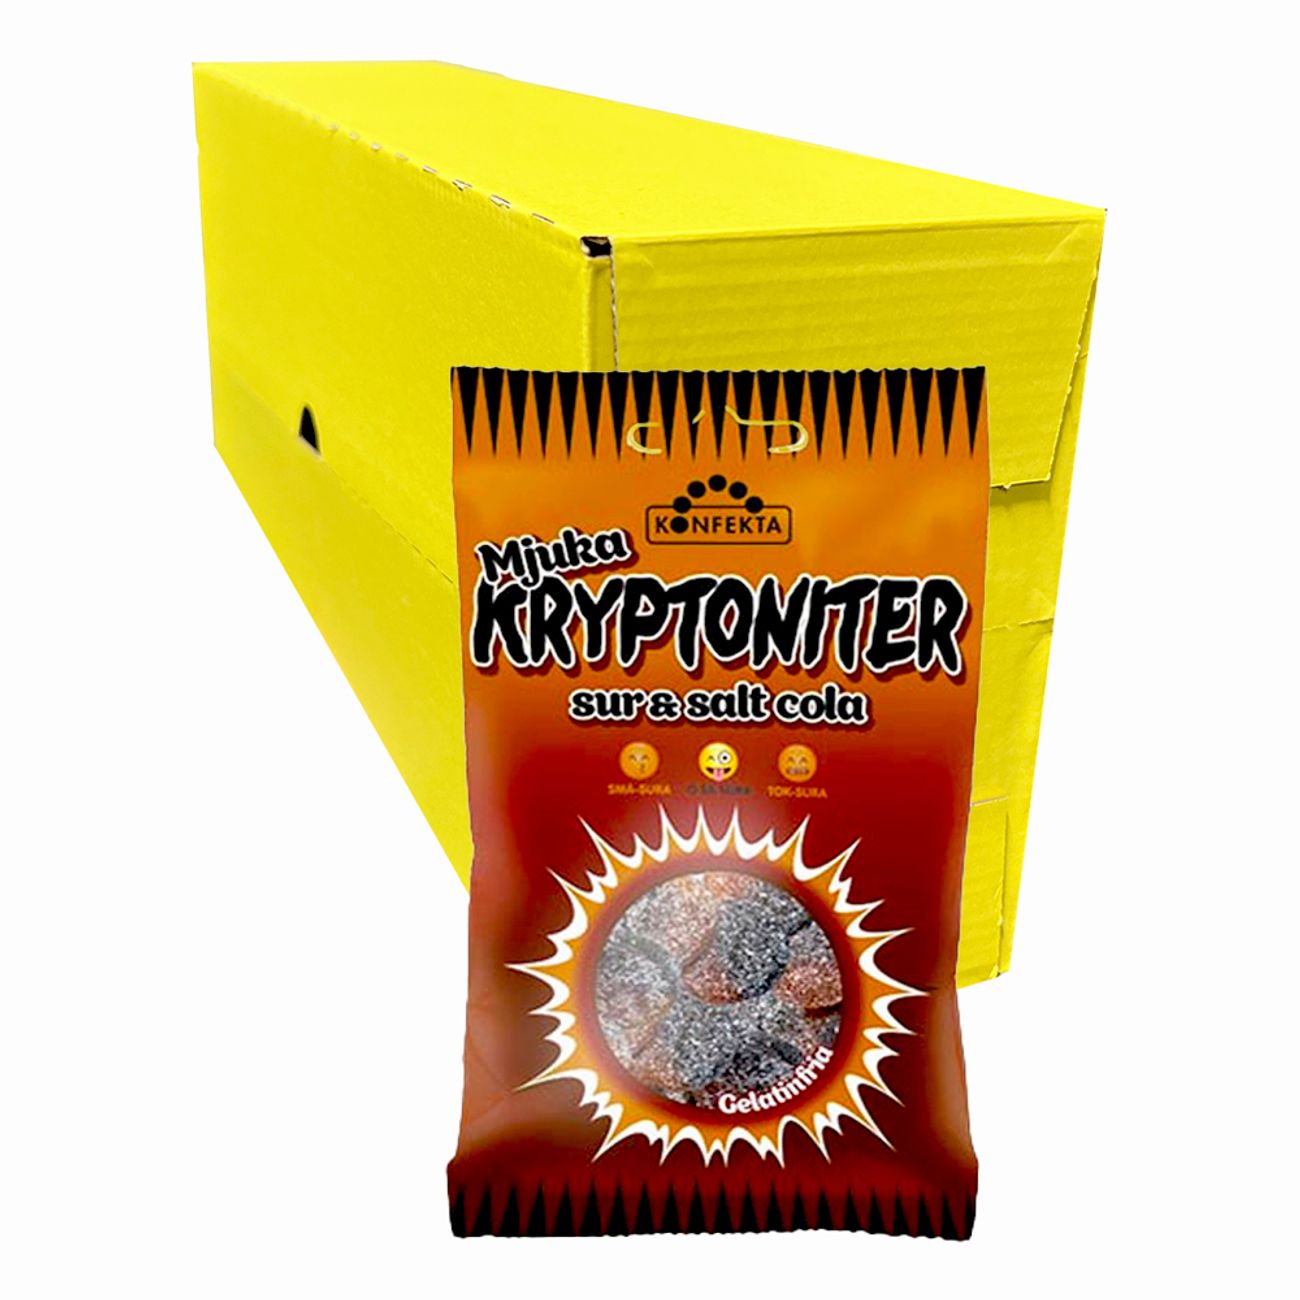 kryptoniter-mjuka-cola-storpack-42579-2